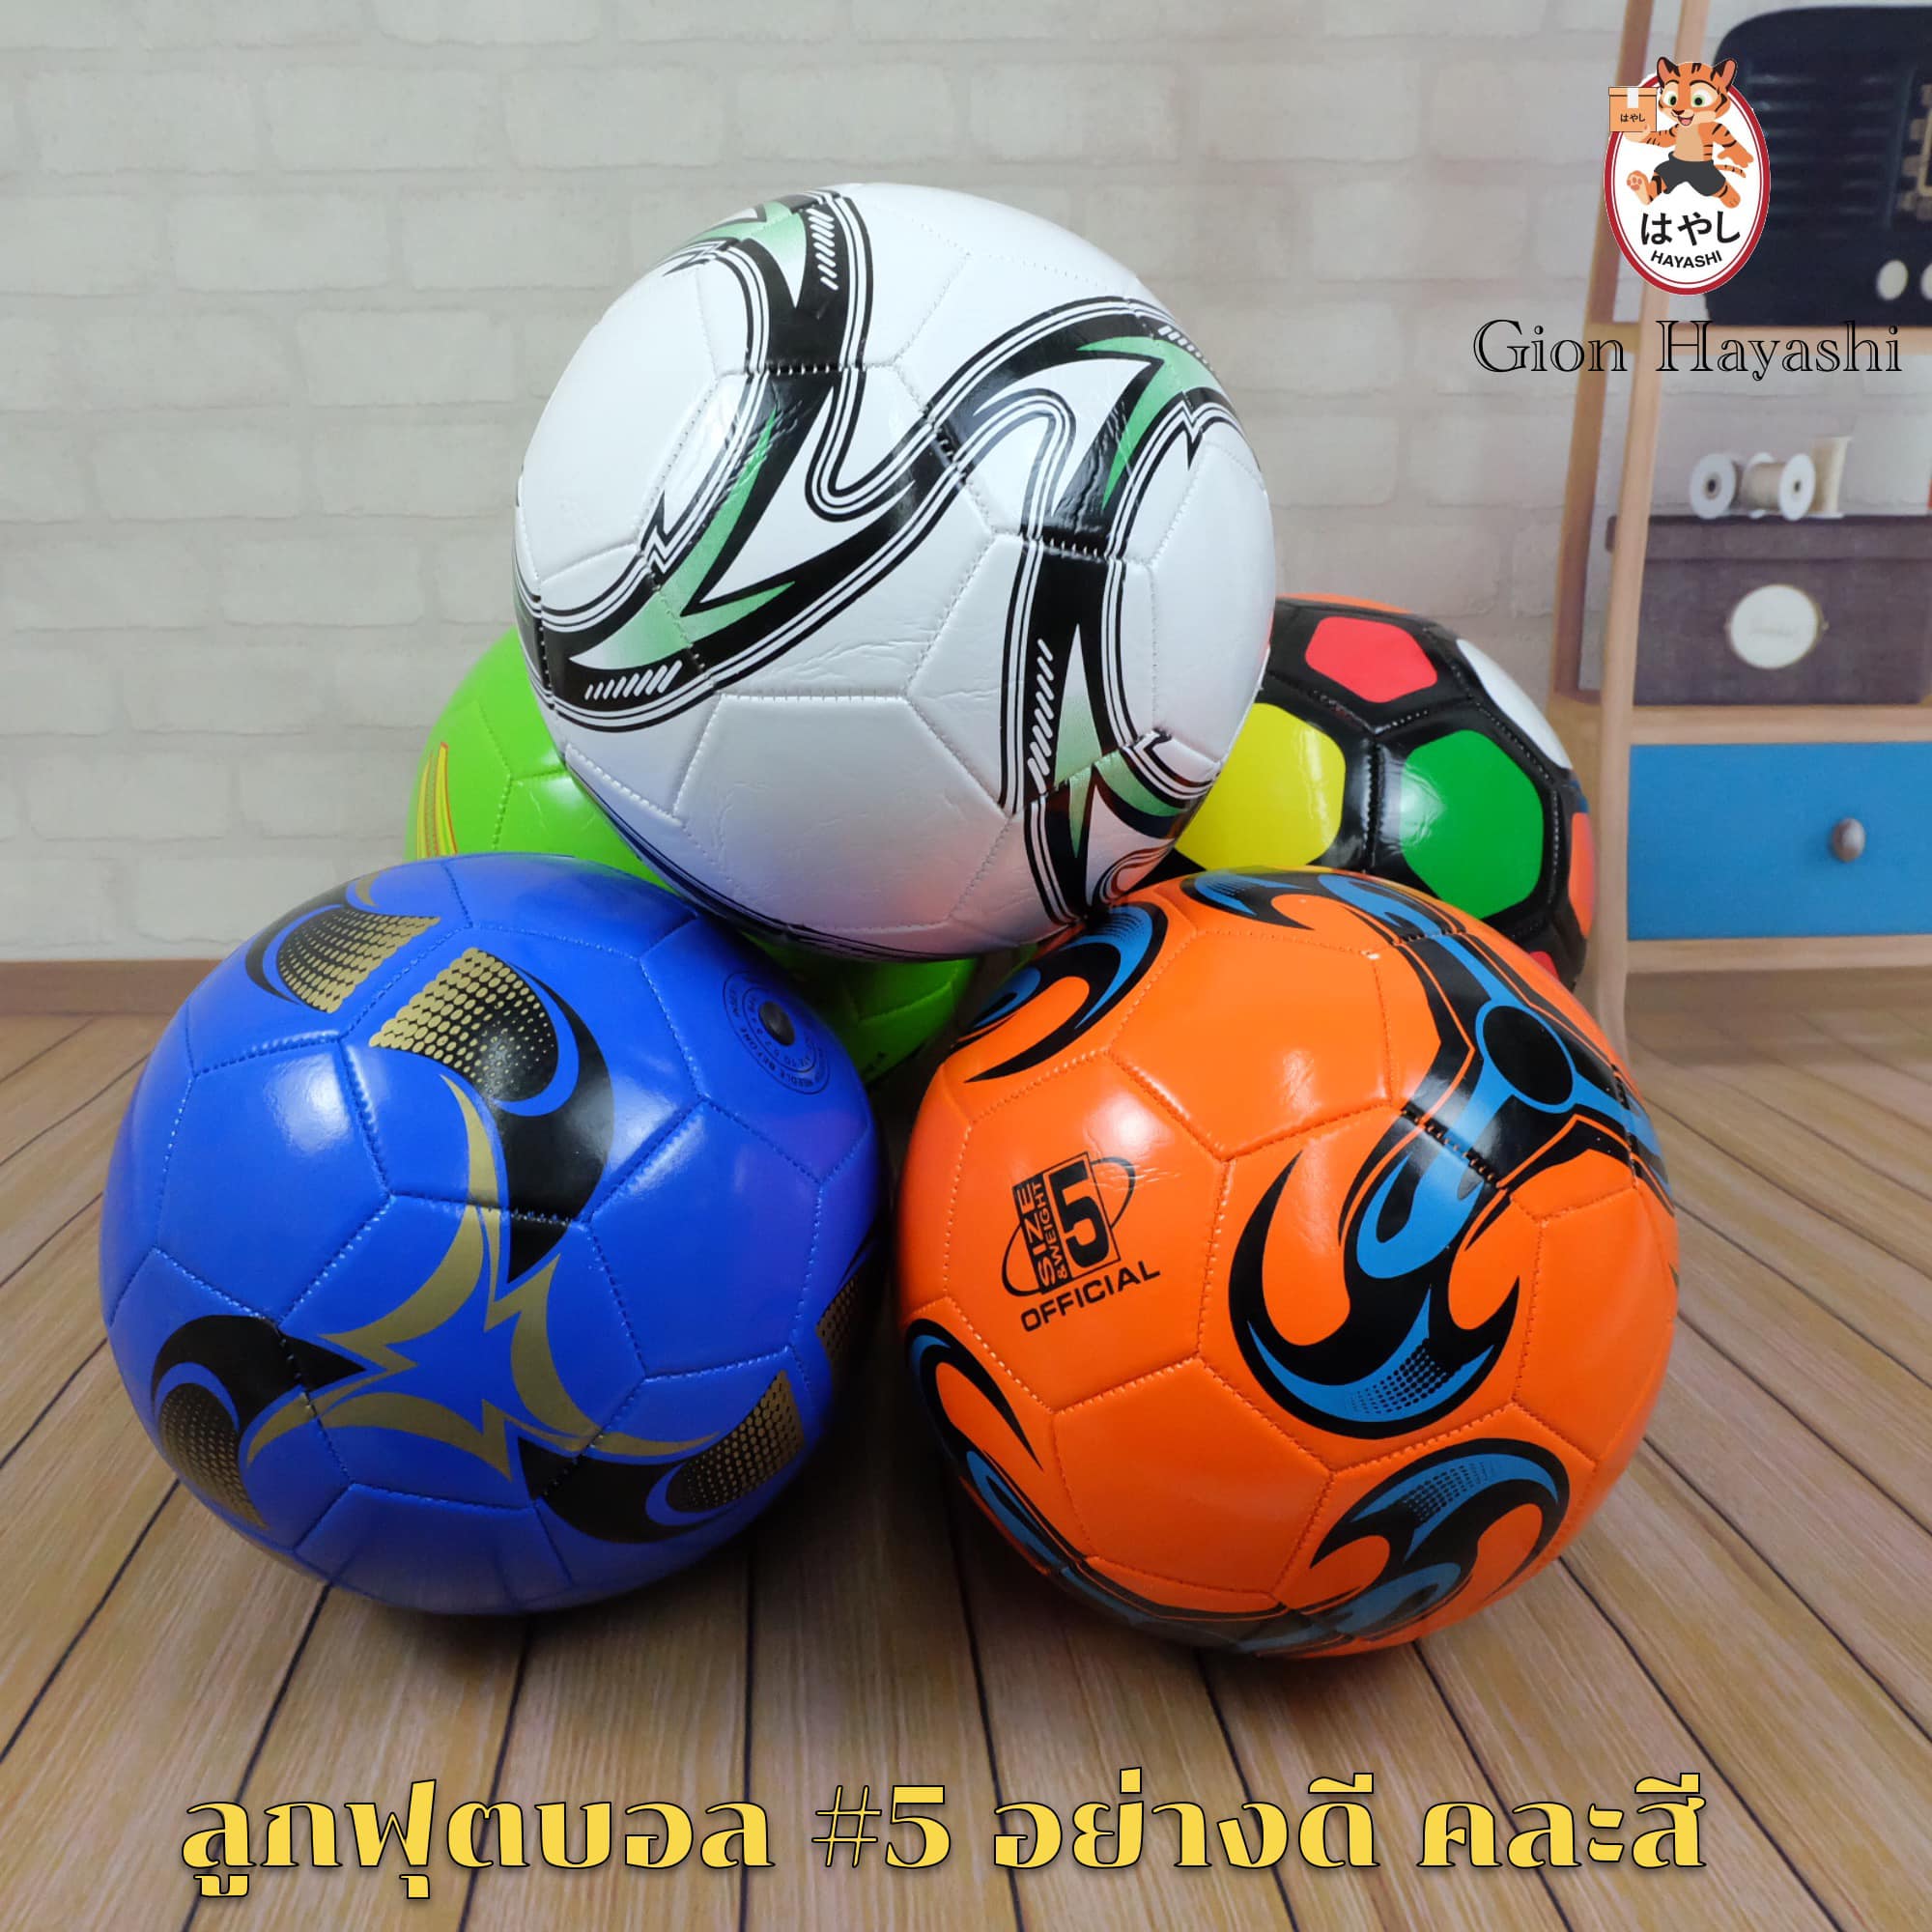 Hayashi - ลูกฟุตบอลไซส์มาตรฐาน Size 5 ทำจากวัสดุ PVC รุ่น DK-002